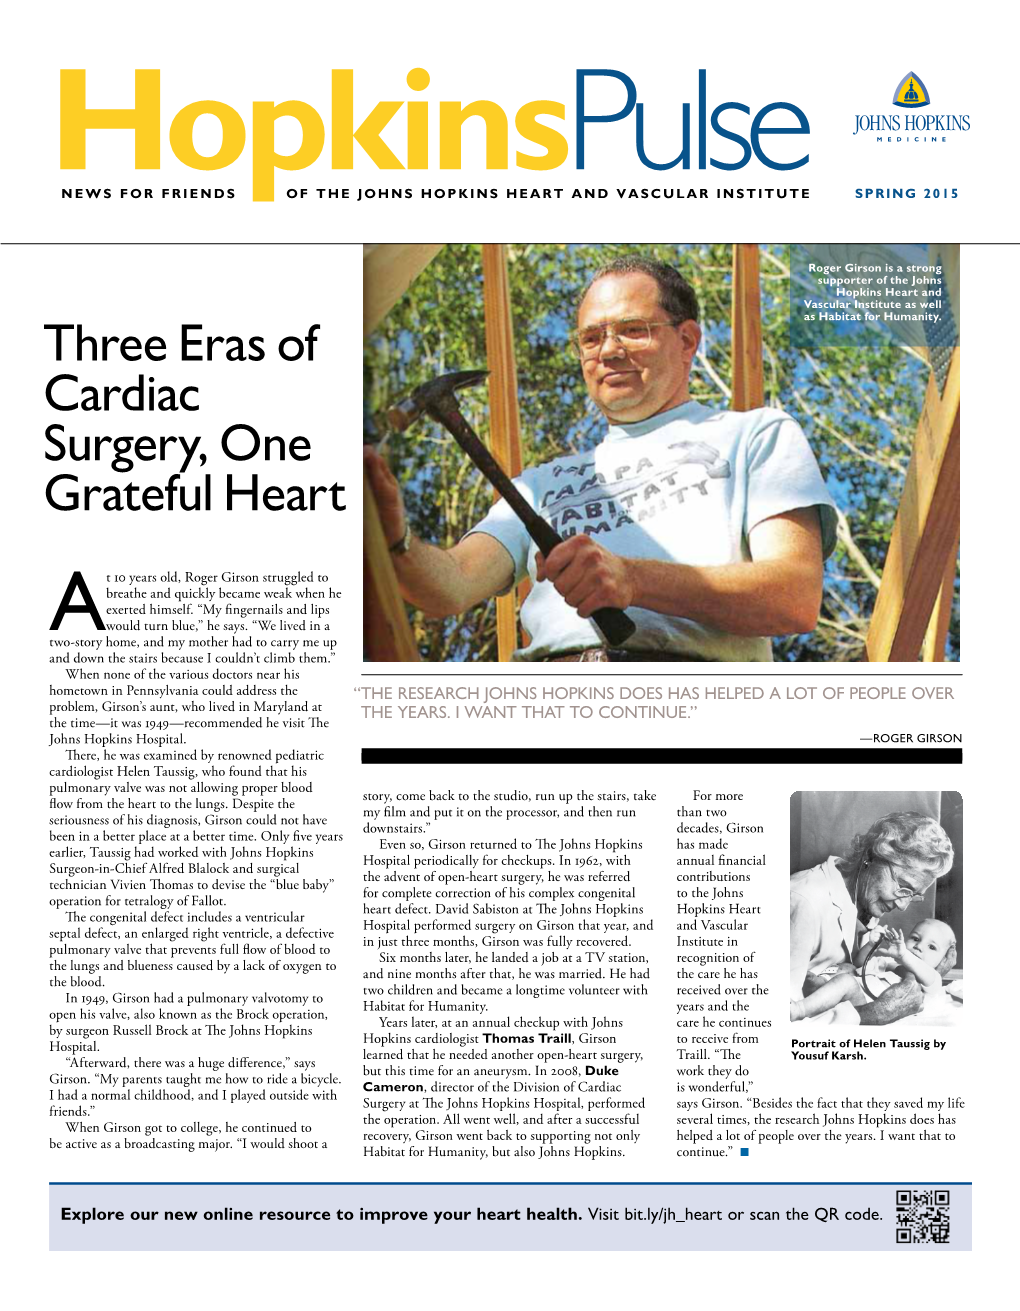 Three Eras of Cardiac Surgery, One Grateful Heart